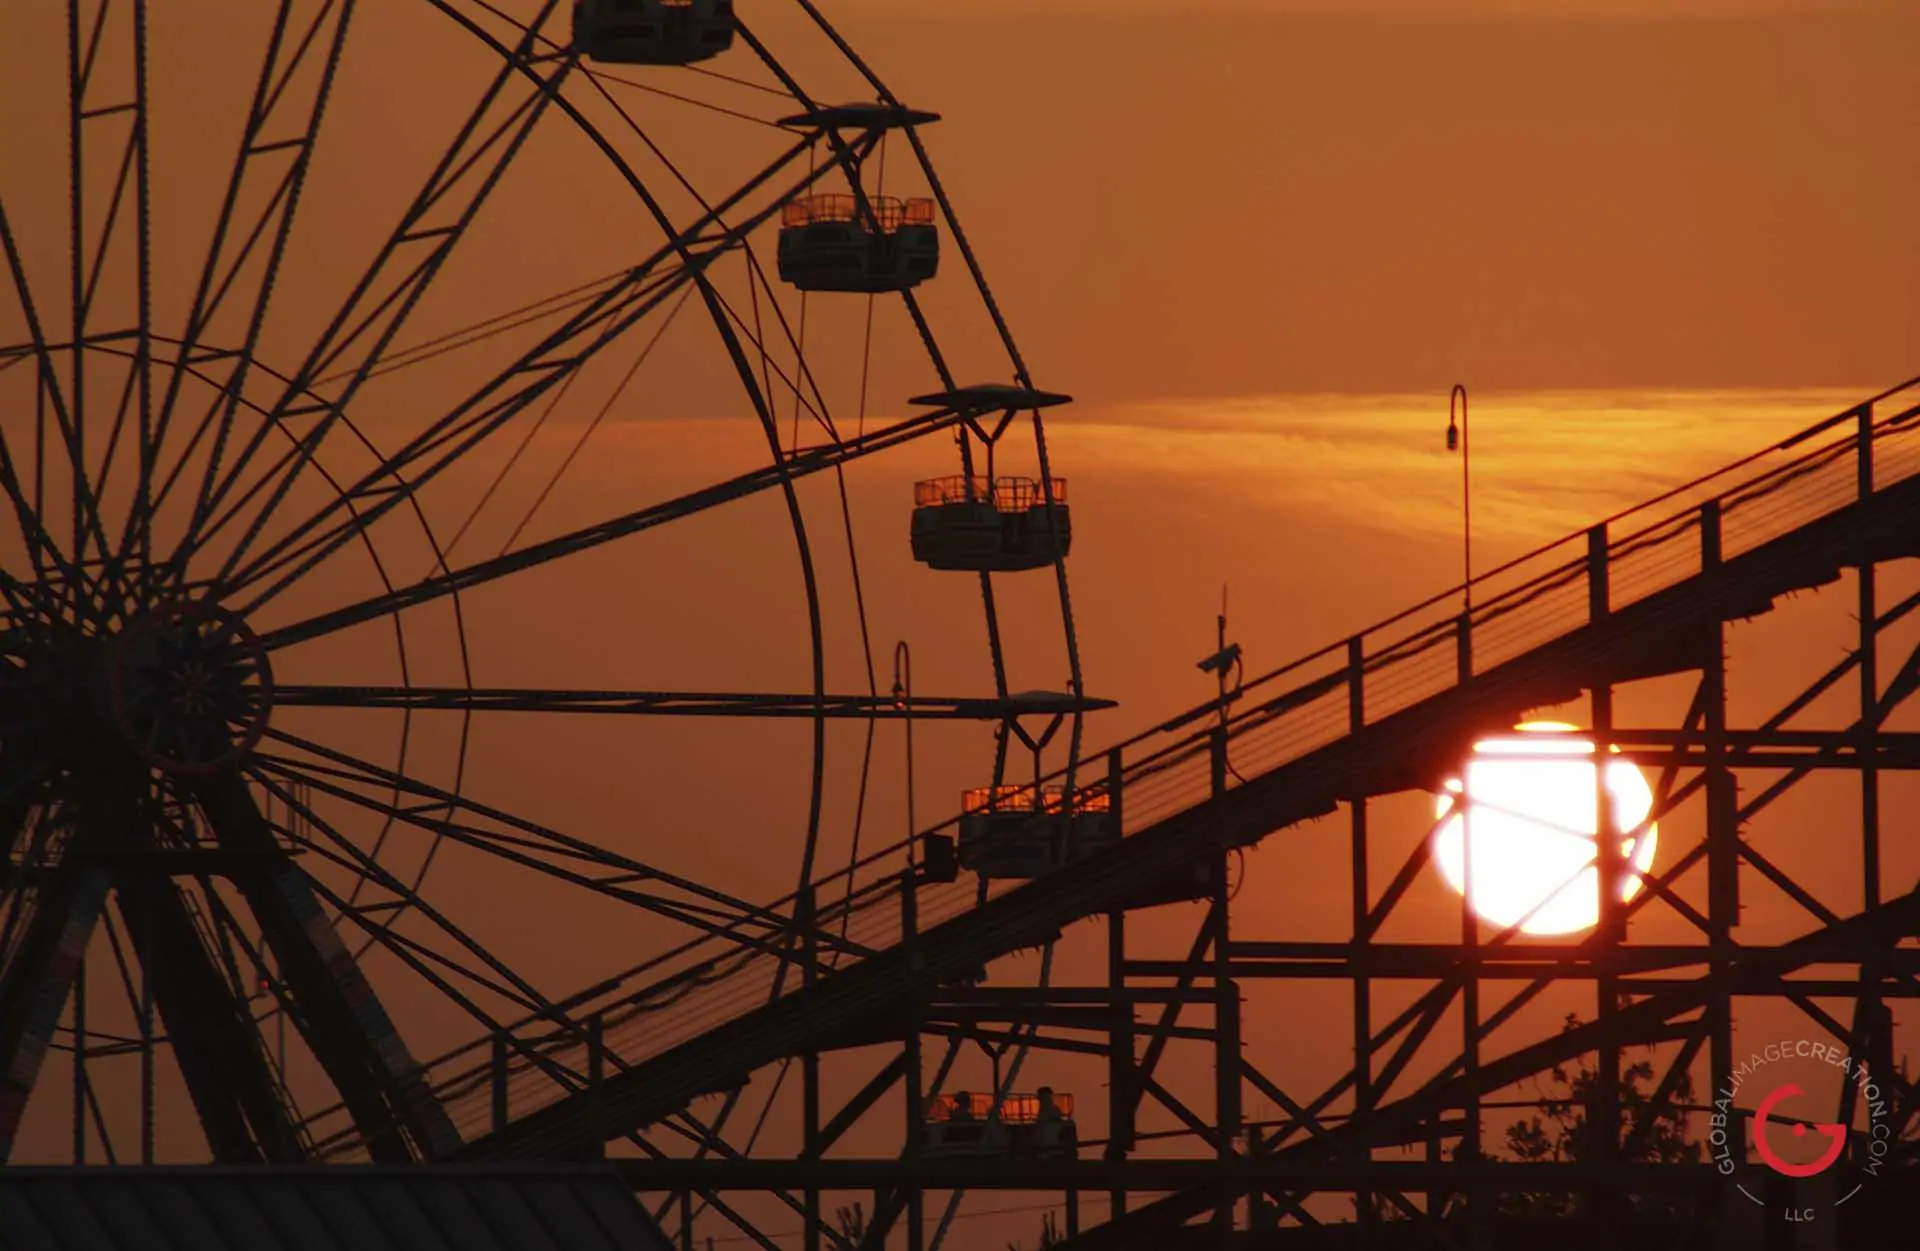 An orange sunset silhouettes the Ferris wheel and roller coaster at celebration city. - Advertising photographers in branson Missouri, Branson Missouri photography